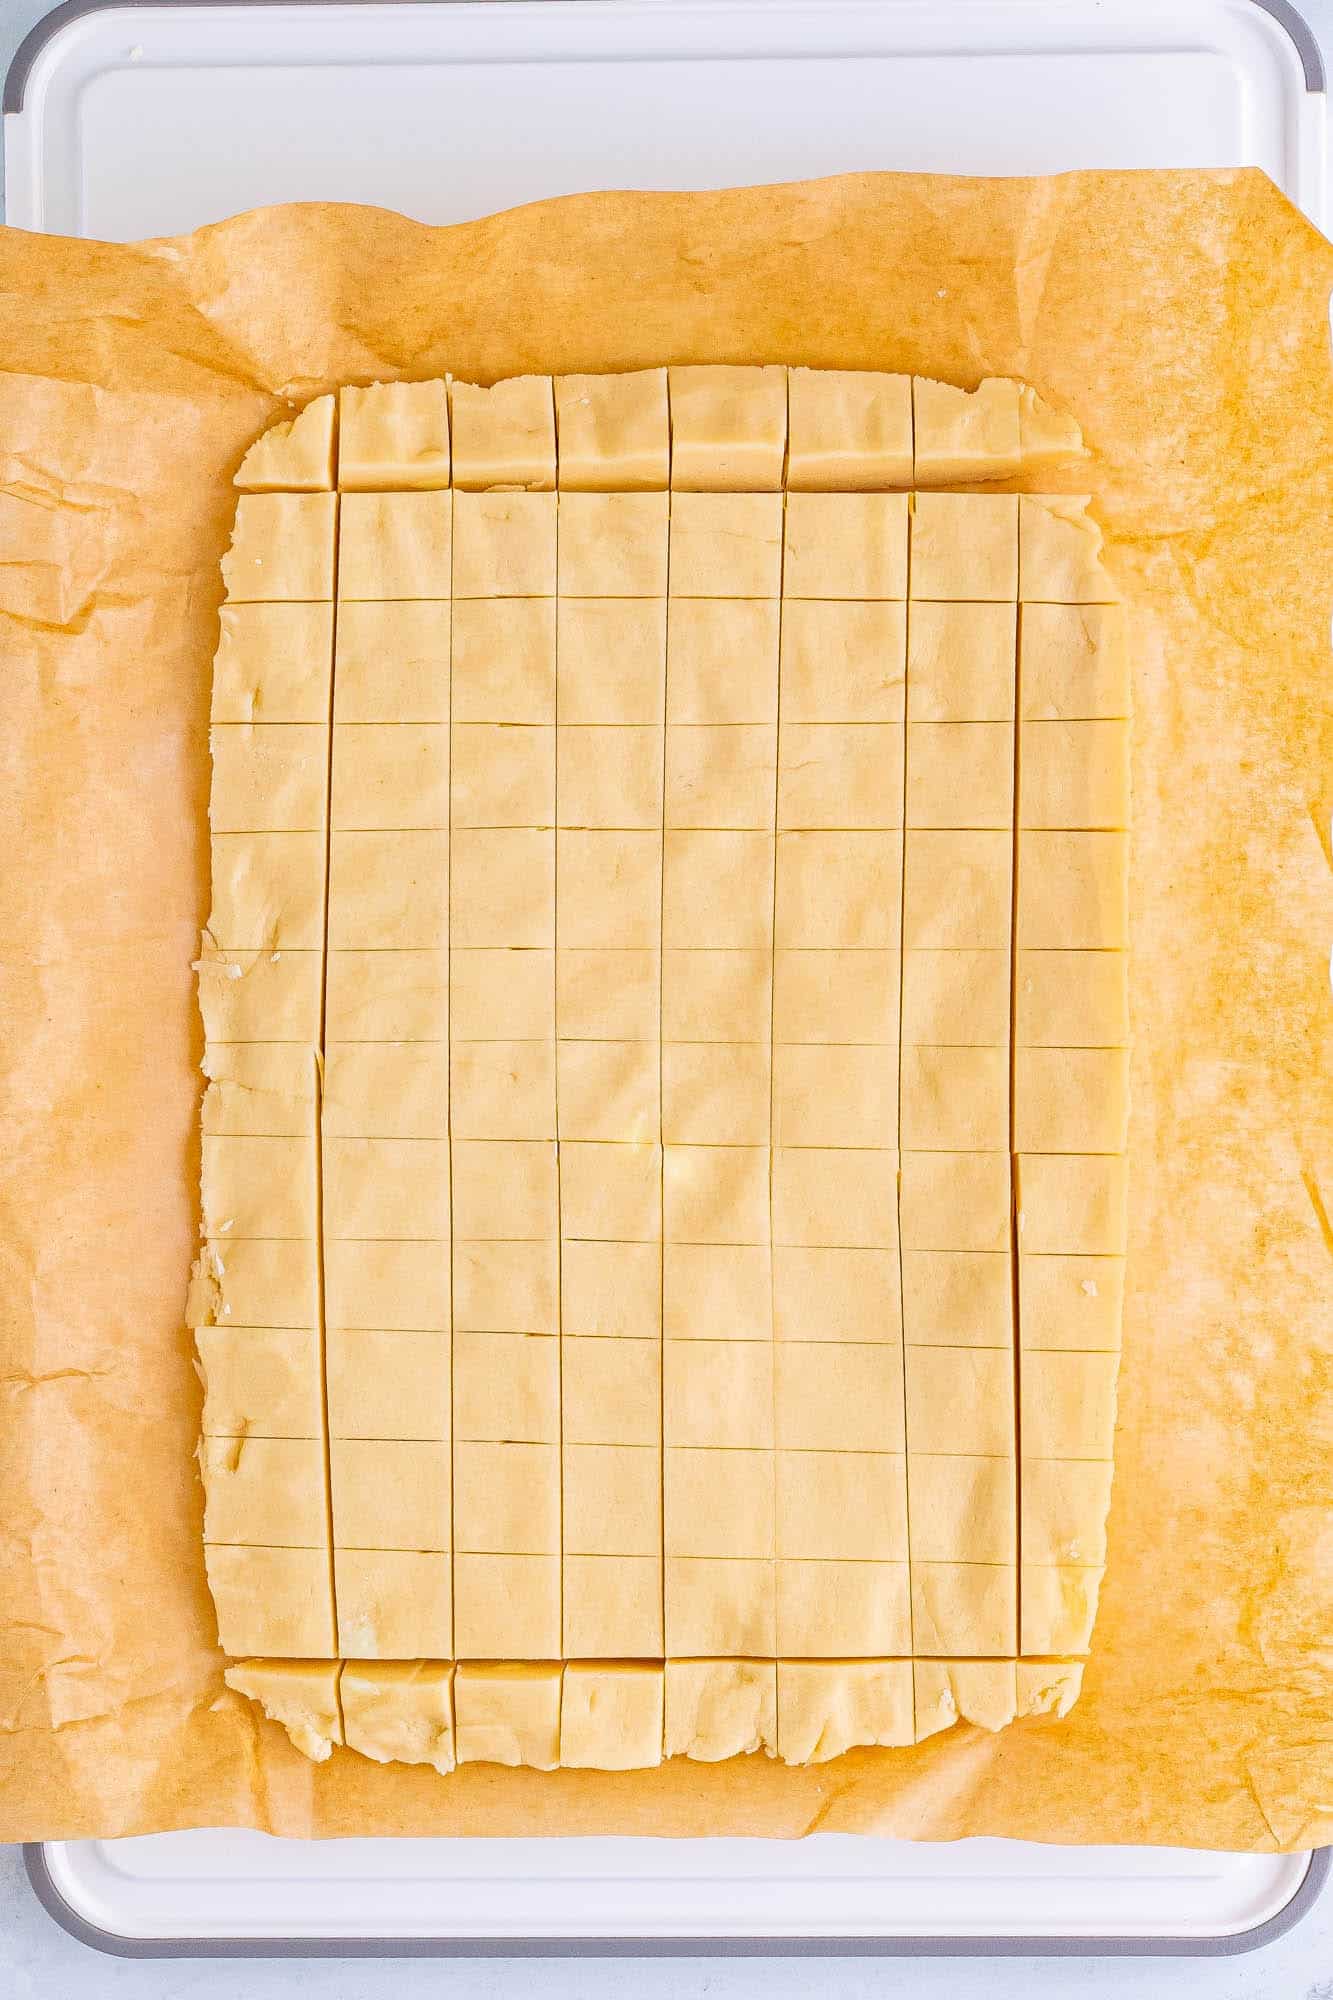 chilled shortbread dough cut into squares.